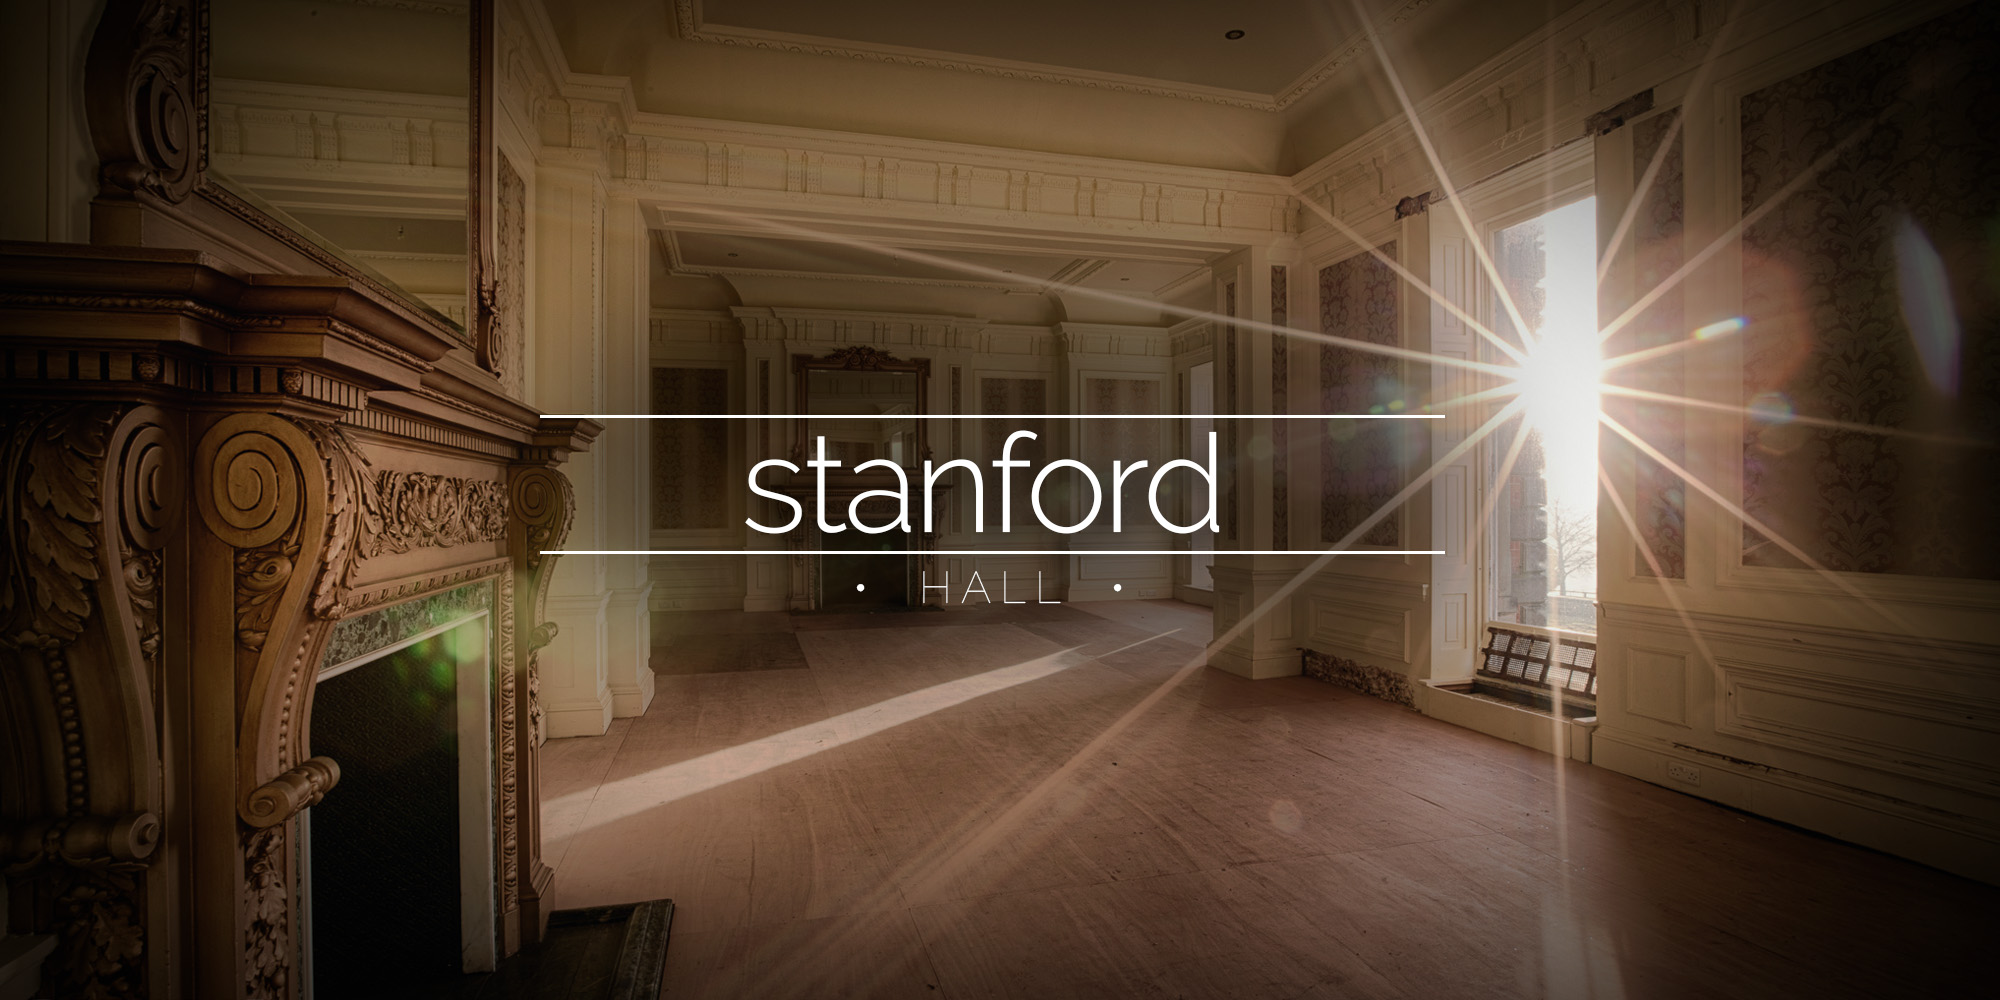 Stanford Hall, Nottinghamshire